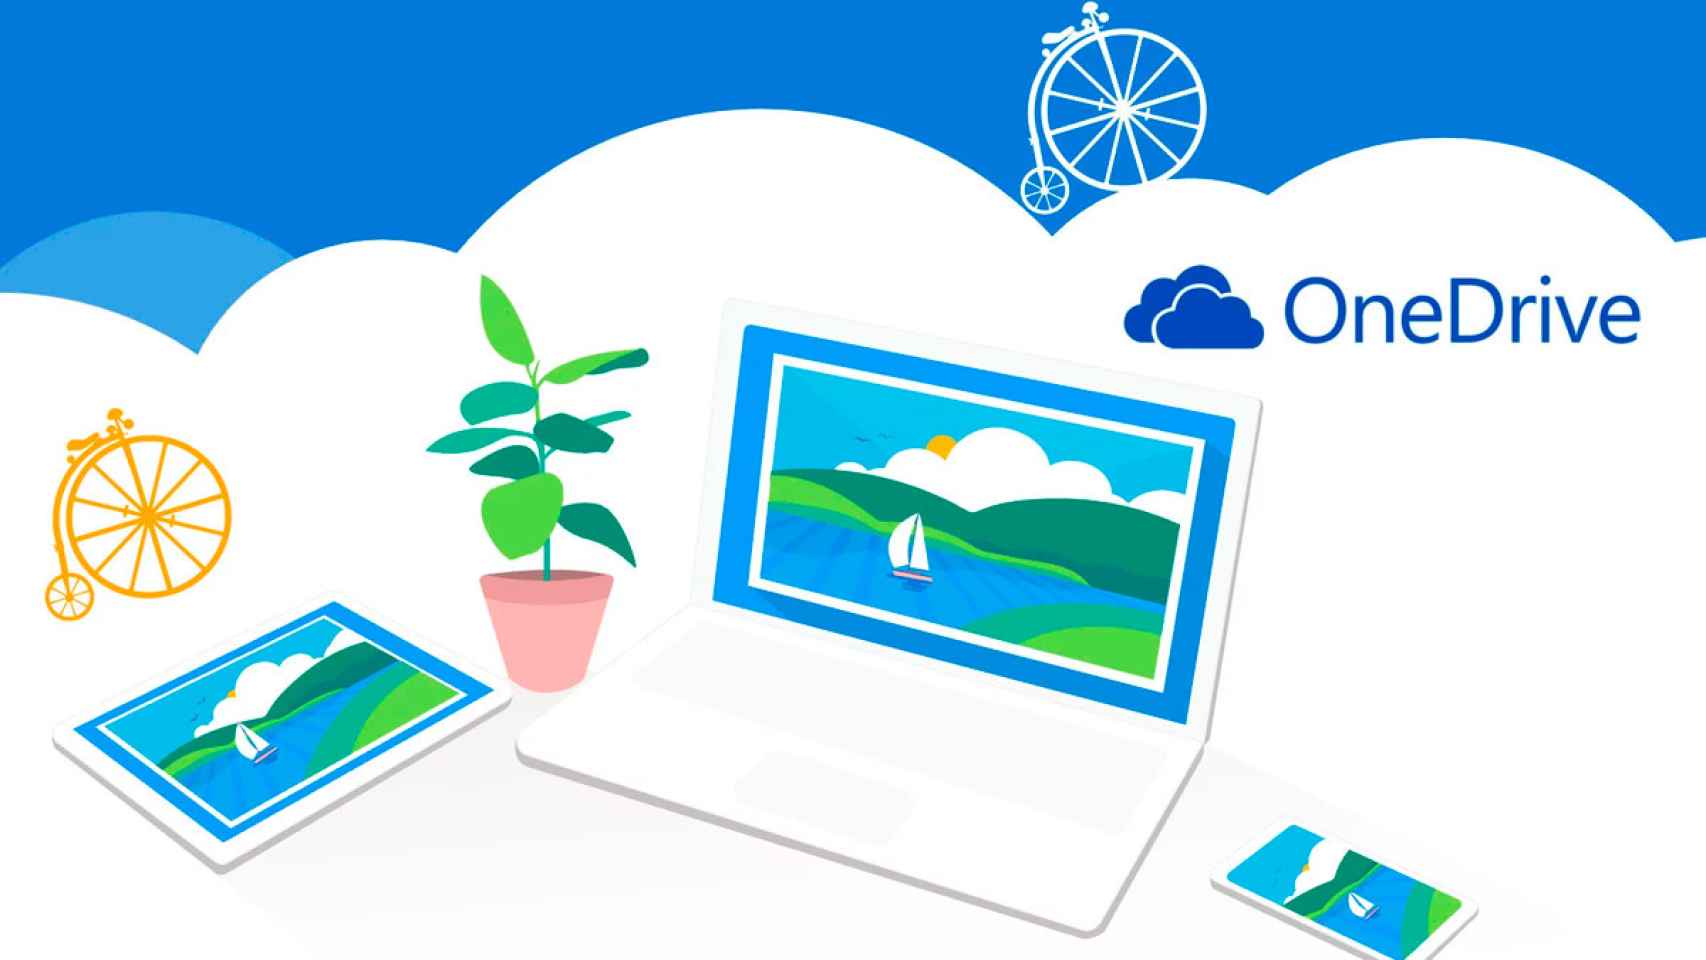 Usando Microsoft OneDrive como alternativa a Dropbox y Google Drive